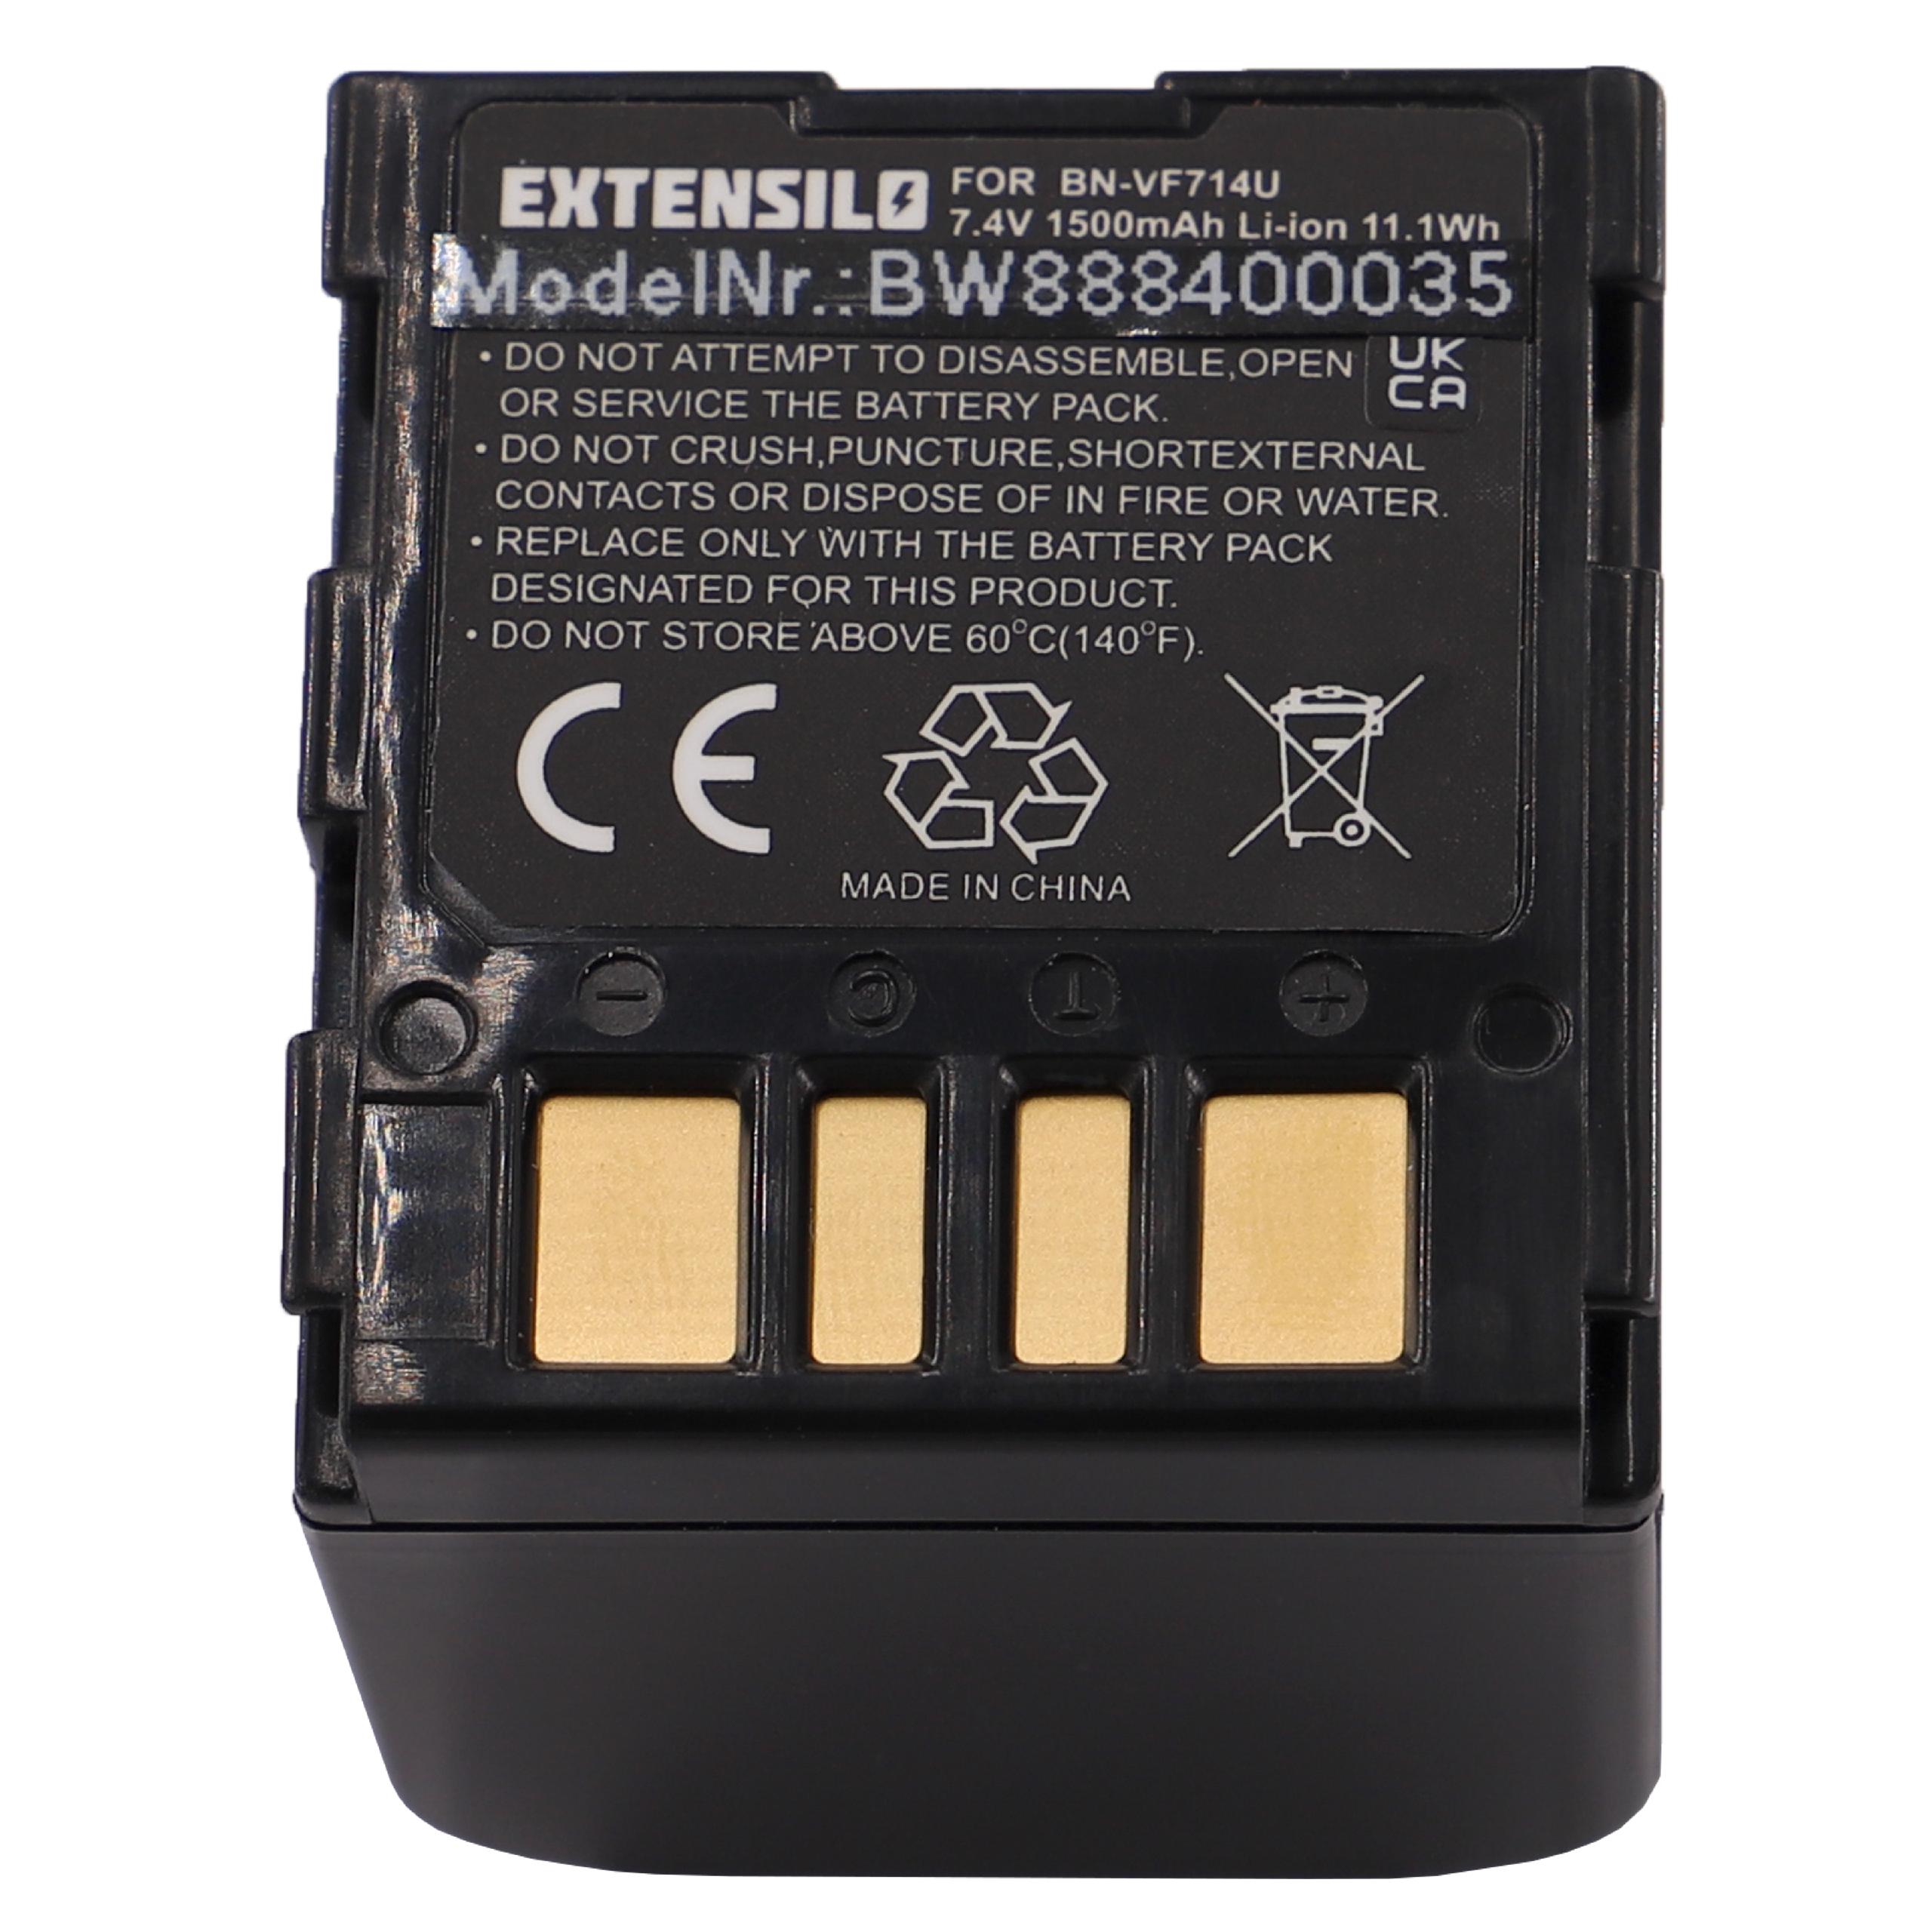 Batterie remplace JVC BN-VF707, BN-VF707U, BN-VF714, BN-VF714U pour appareil photo - 1500mAh 7,4V Li-ion